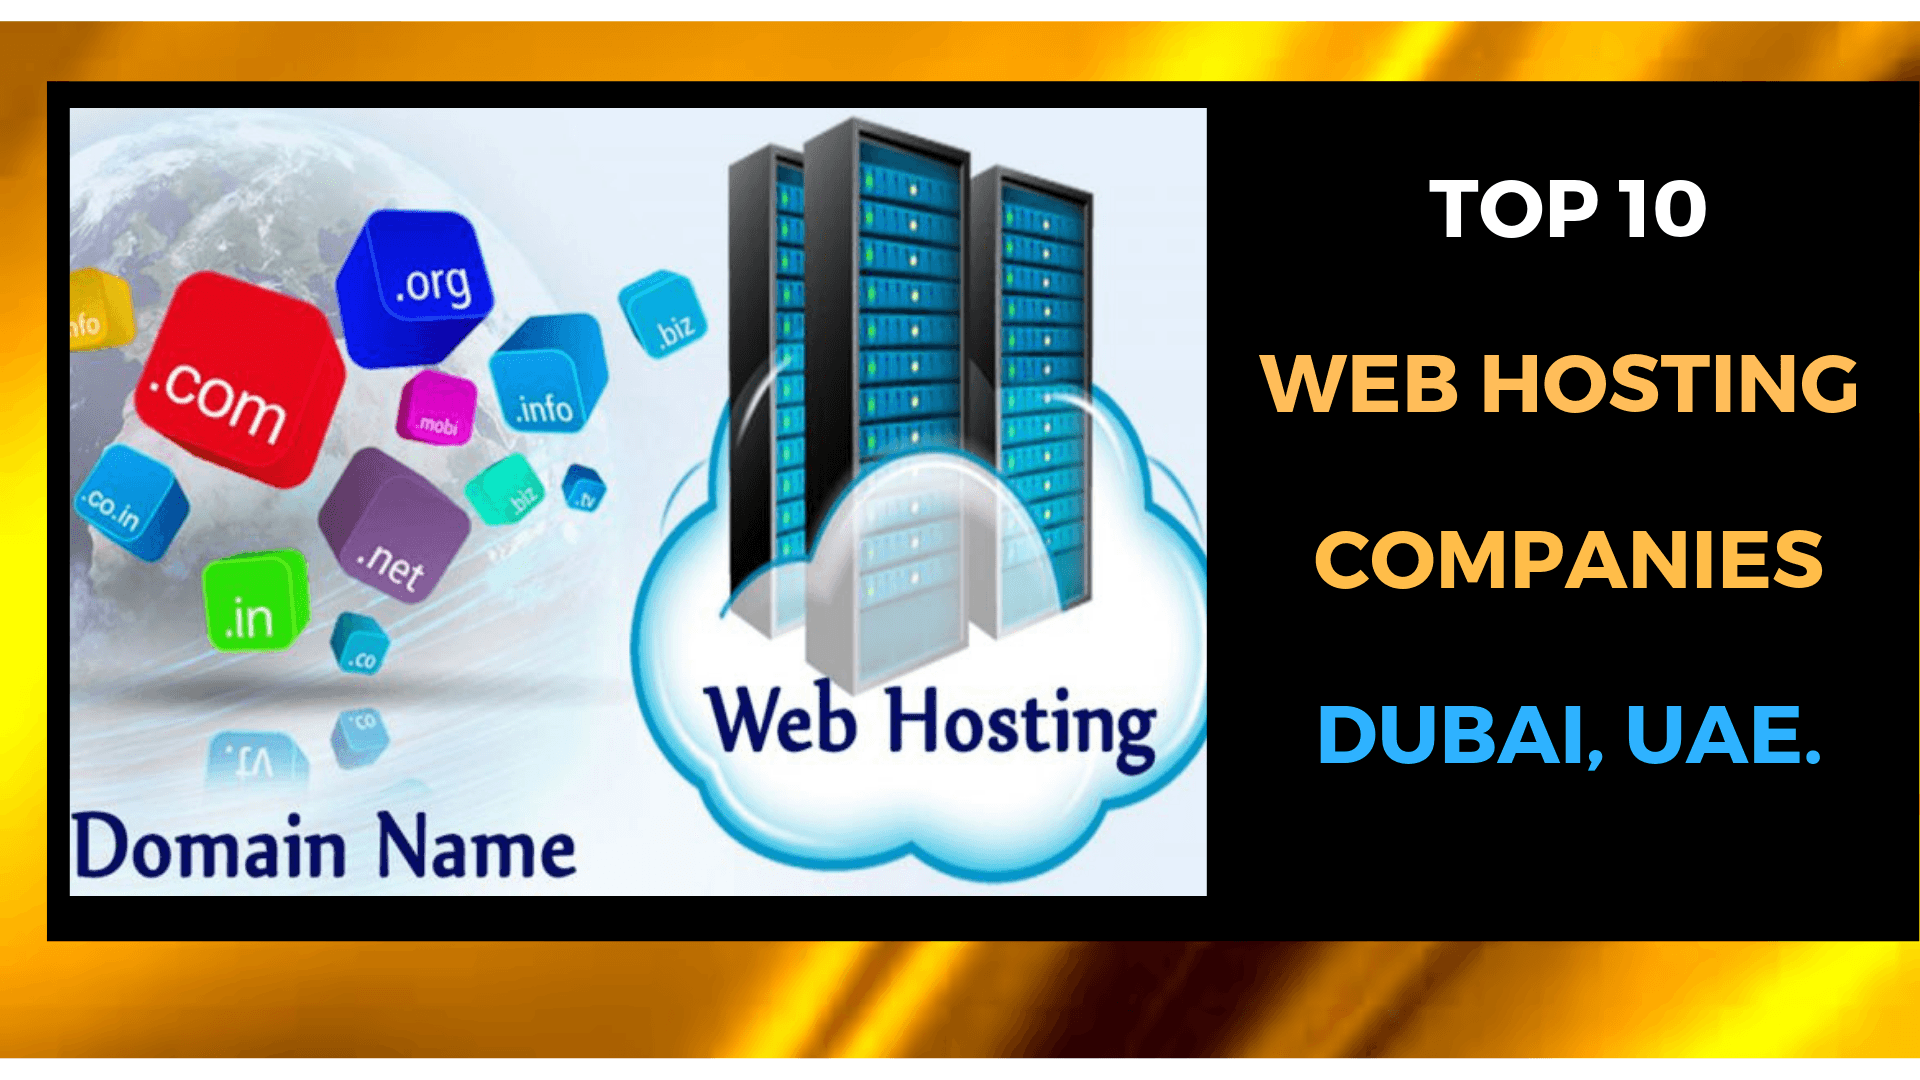 Top 10 Web Hosting Companies in Dubai, UAE